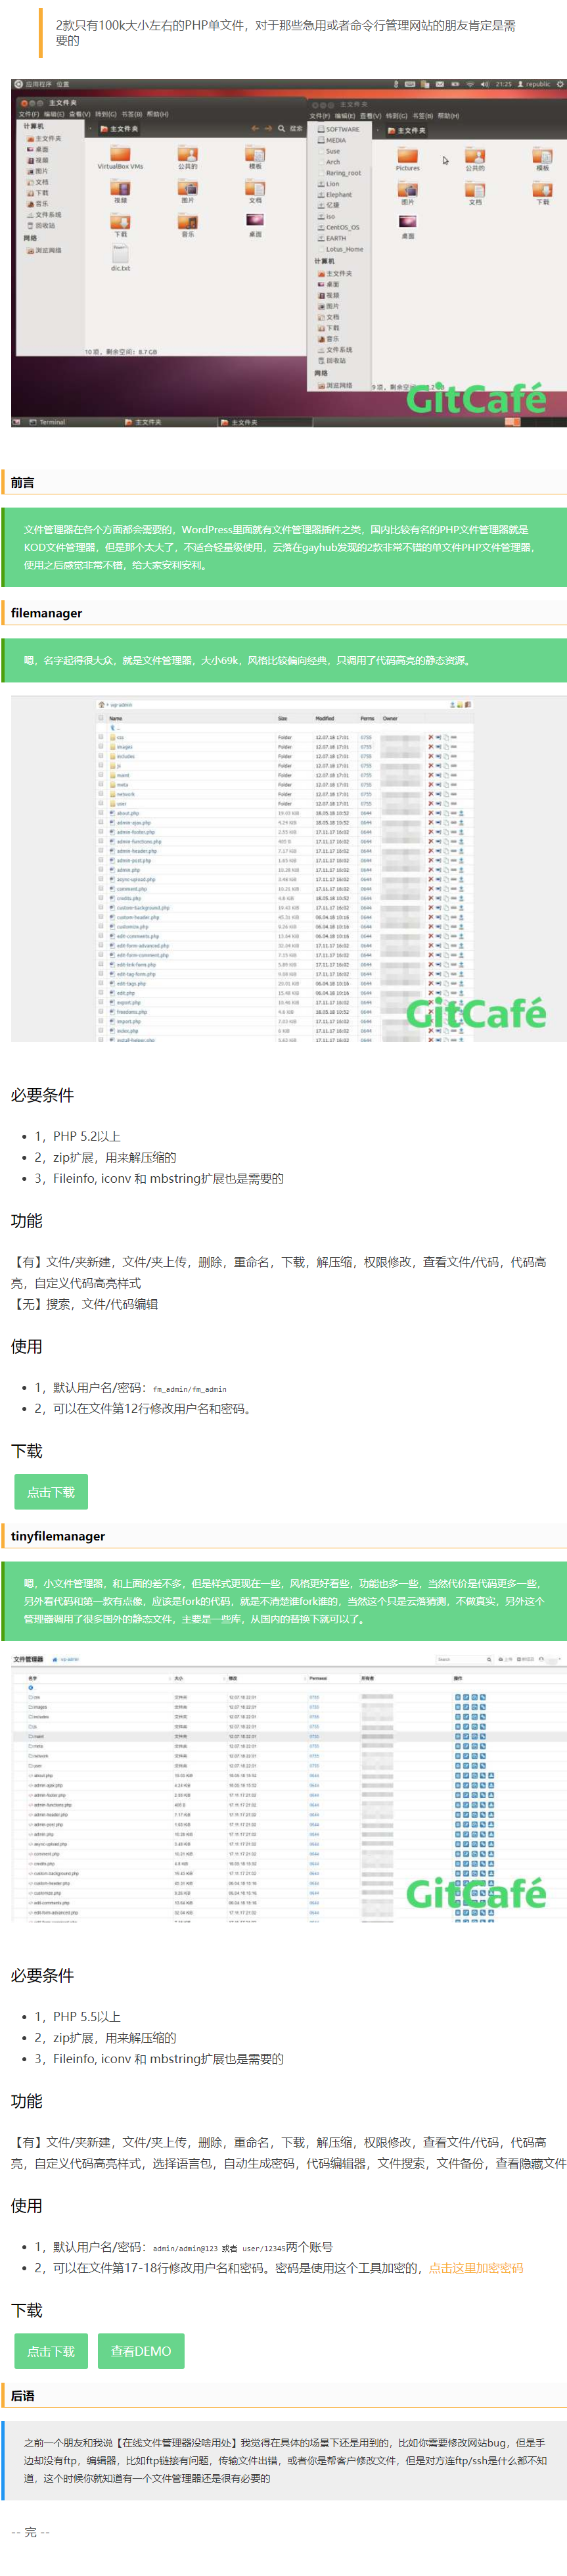 gitcafe.net_archives_6998.html.png